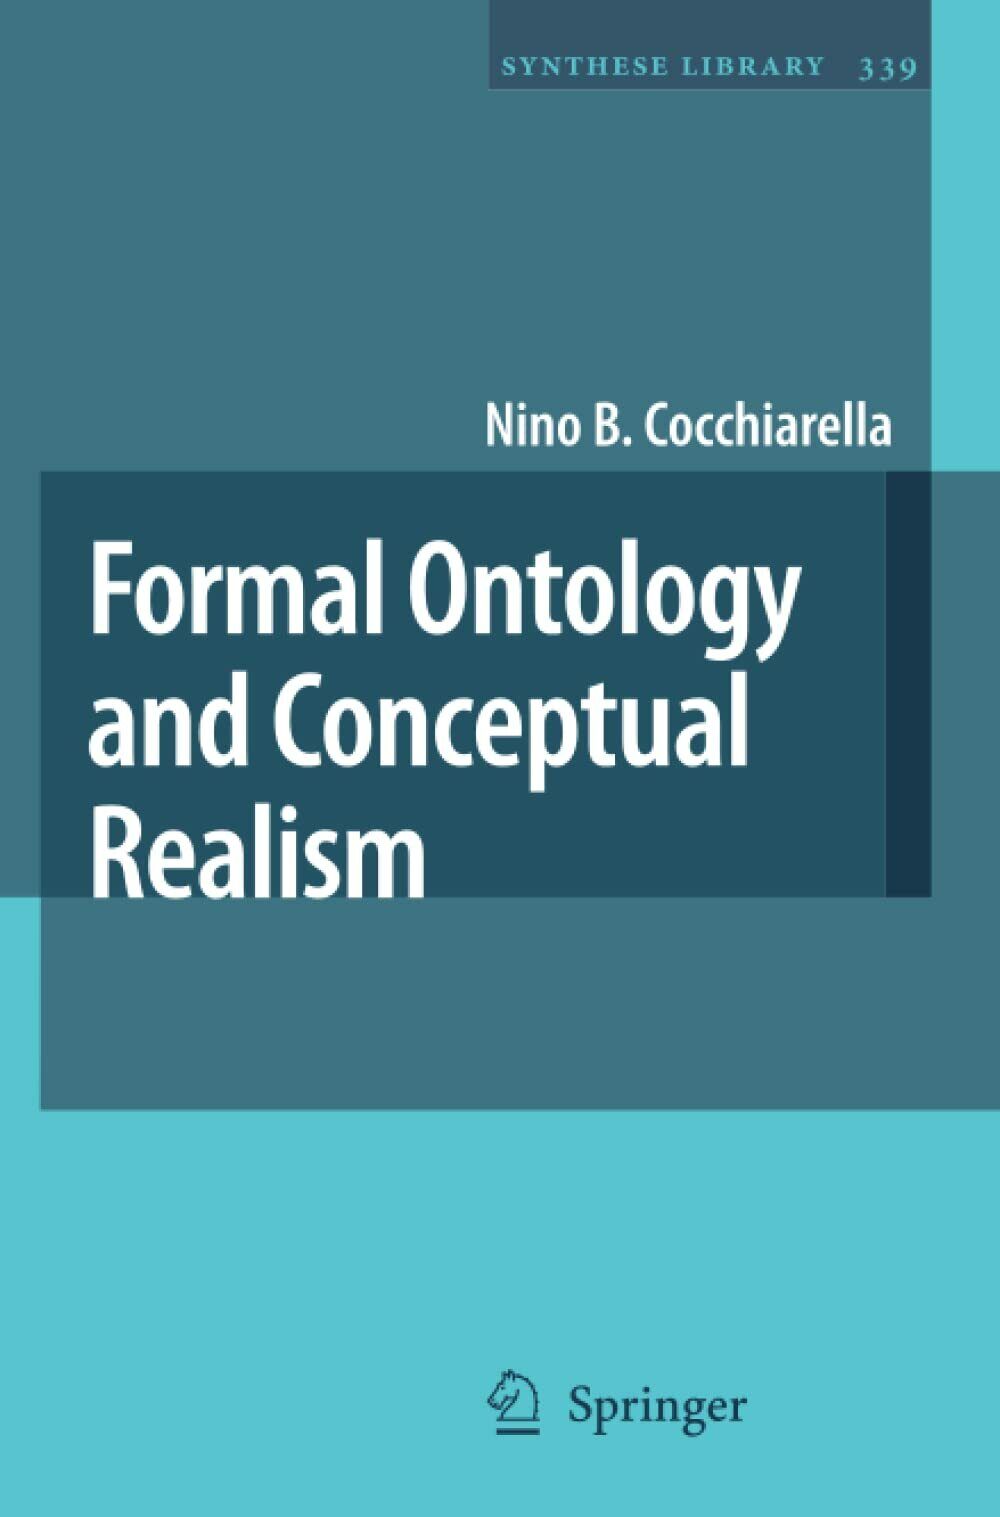 Formal Ontology and Conceptual Realism - Nino B. Cocchiarella - Springer, 2010